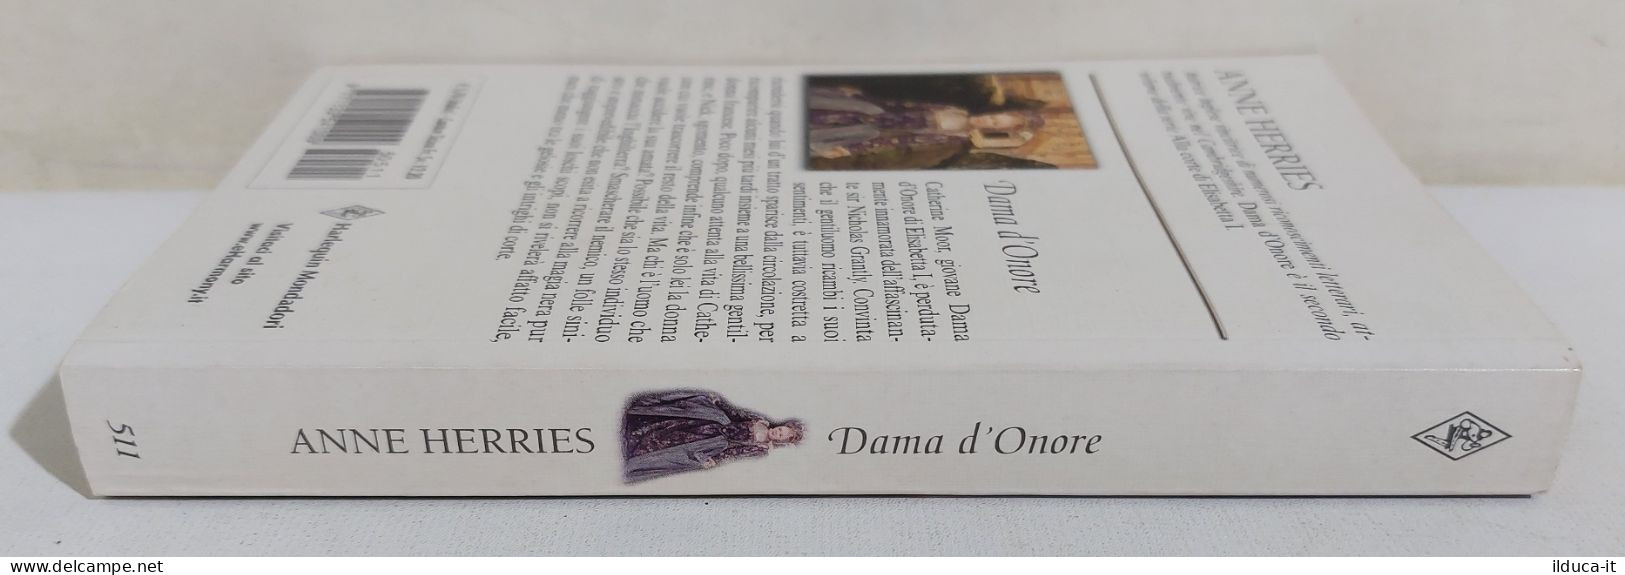 37241 V Anne Herries - Dama D'Onore - Harlequin Mondadori 2005 - Classic